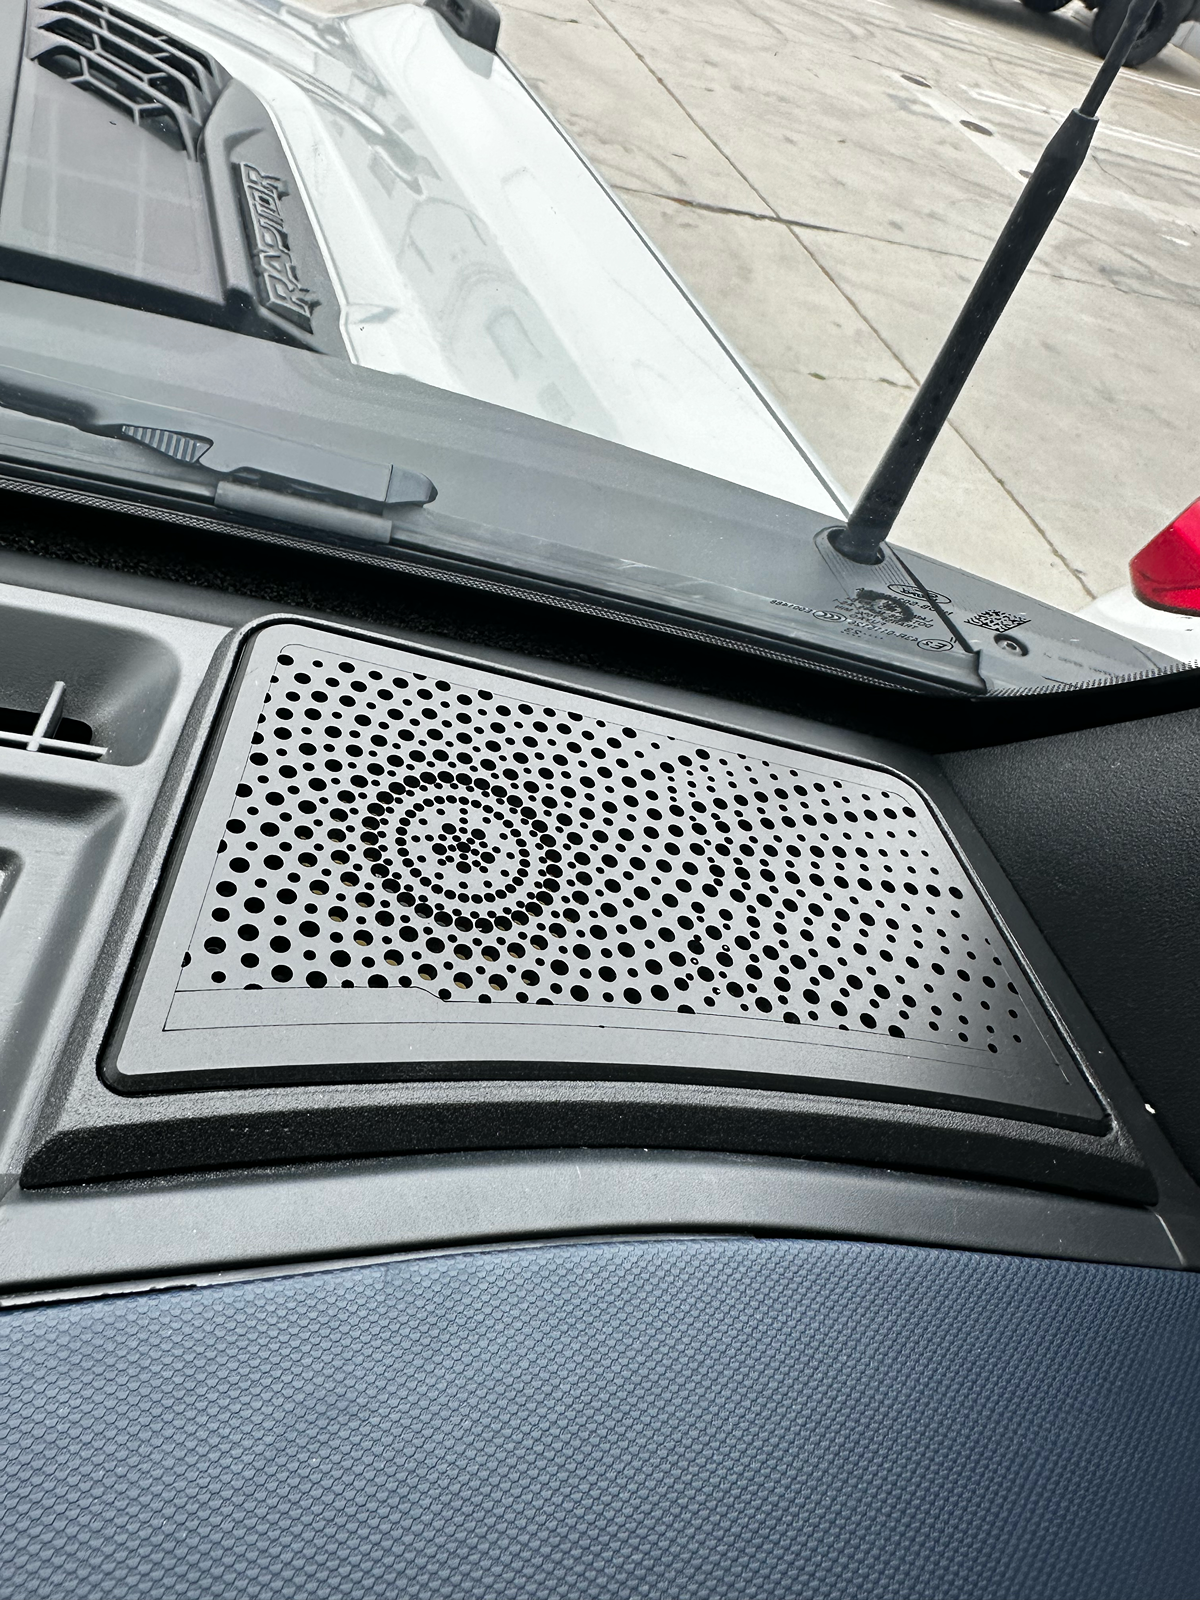 Ford Bronco Dream stereo system upgrade build in Bronco Raptor IMG-2267